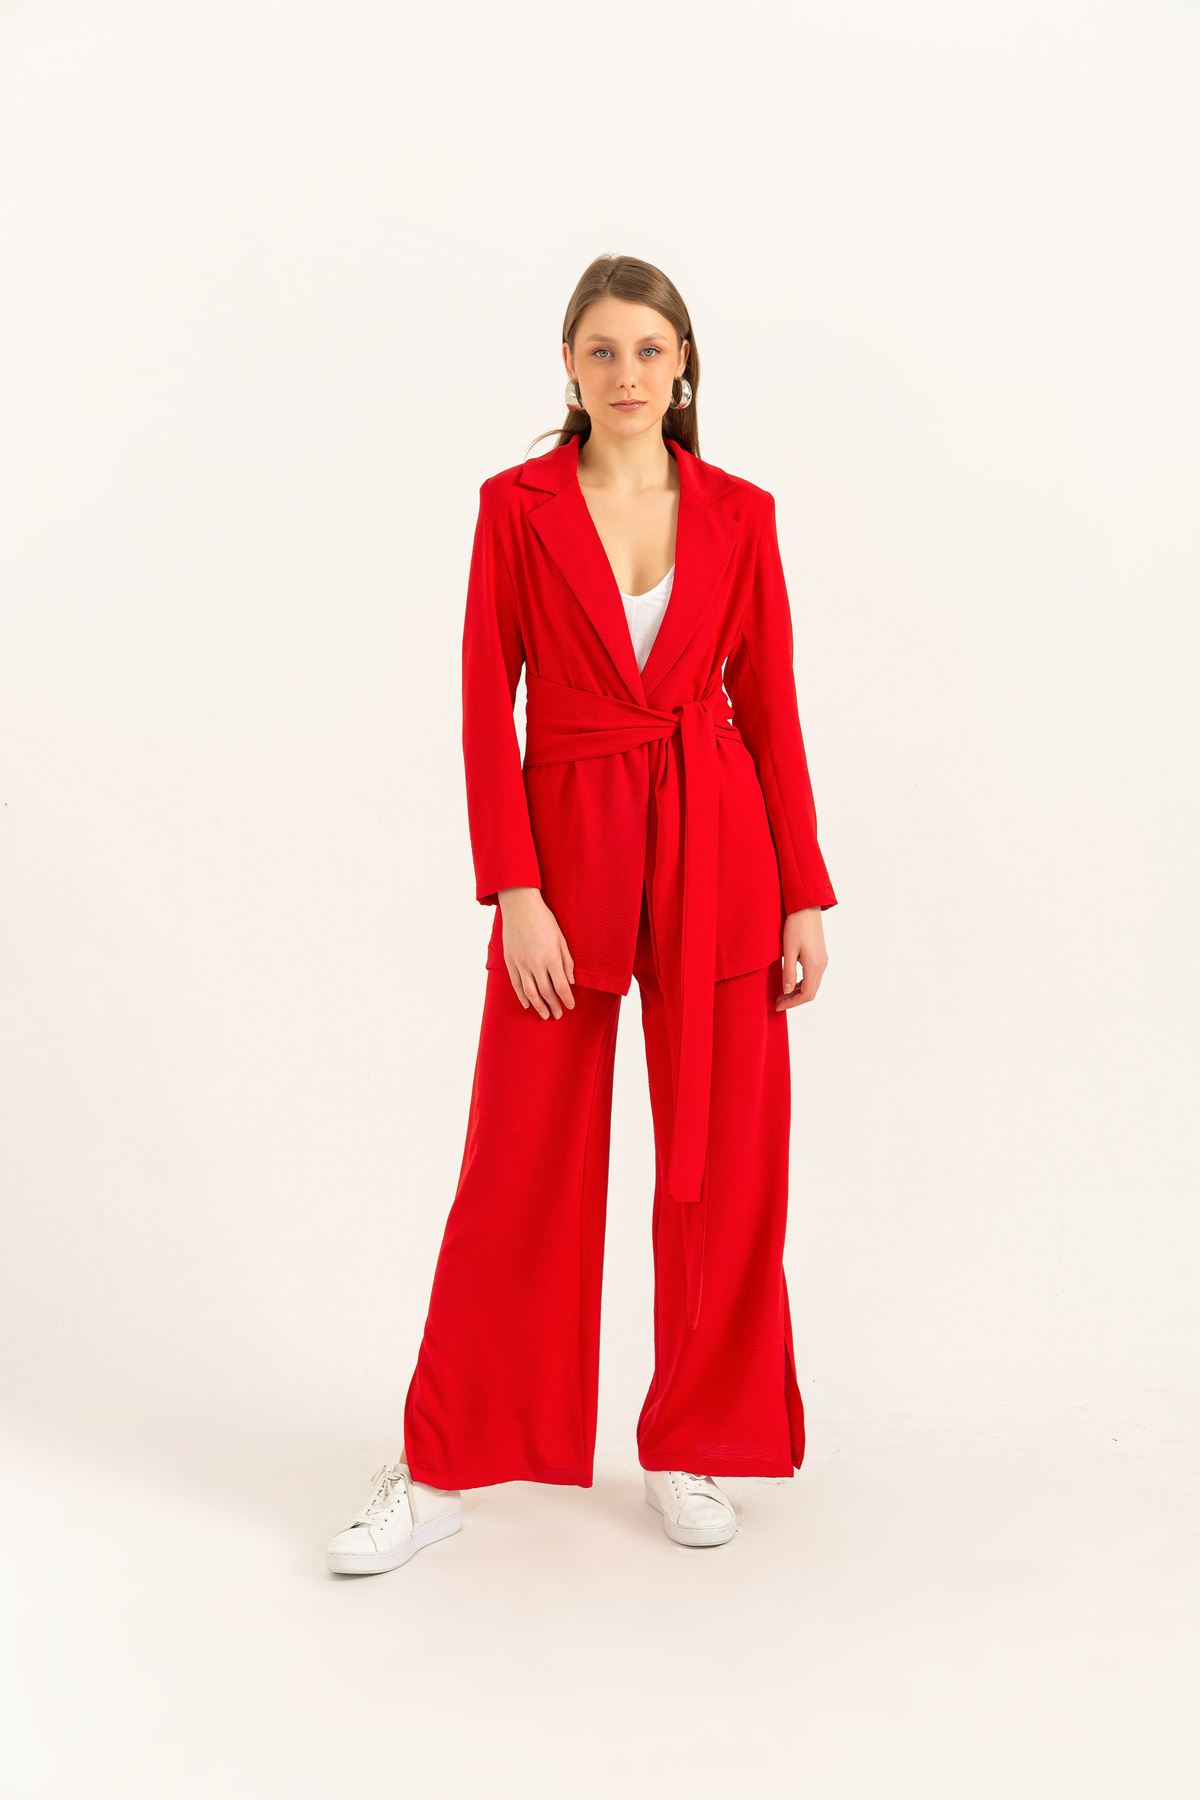 Sandy Fabric Tight Fit Geometric Pattern Padded Women Dress-Red